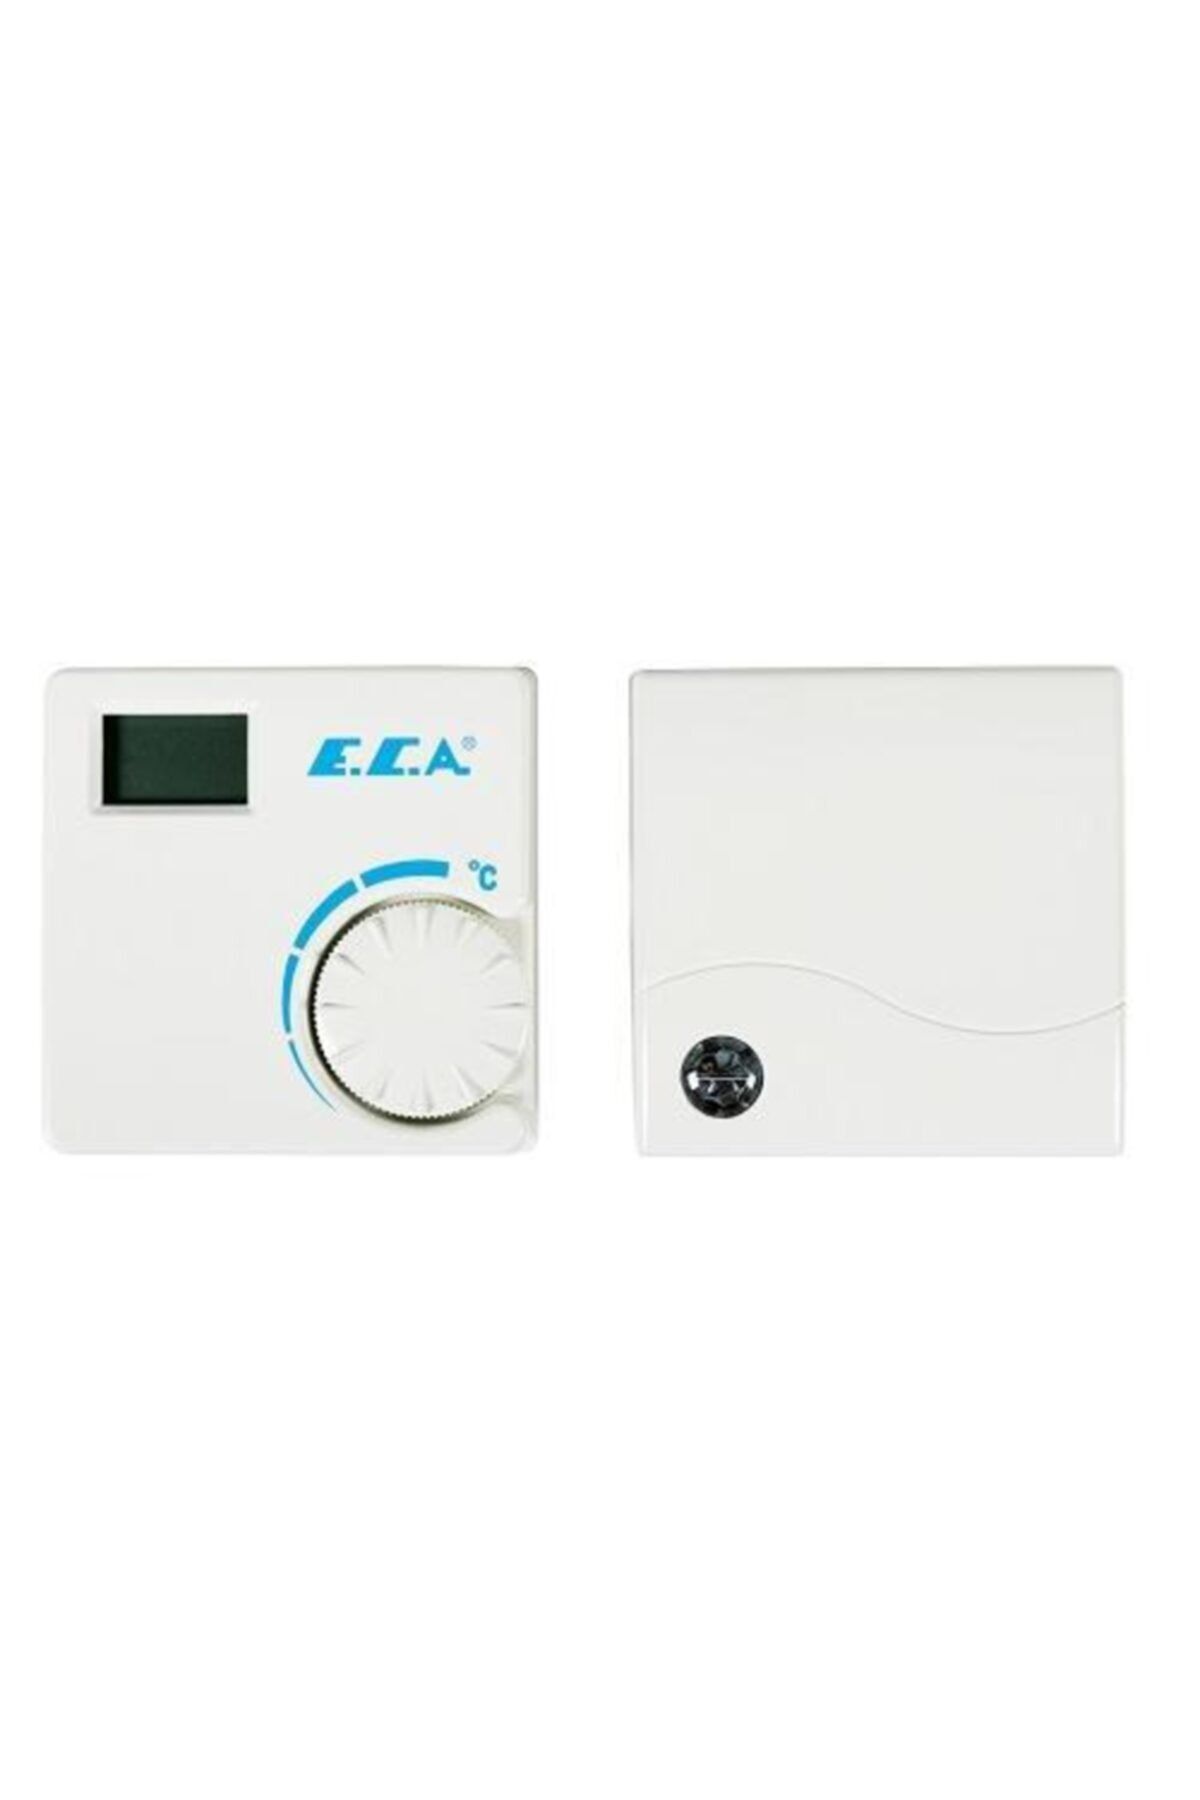 Eca E.c.a Kablosuz Oda Termostatı On/off Dijital Termostat